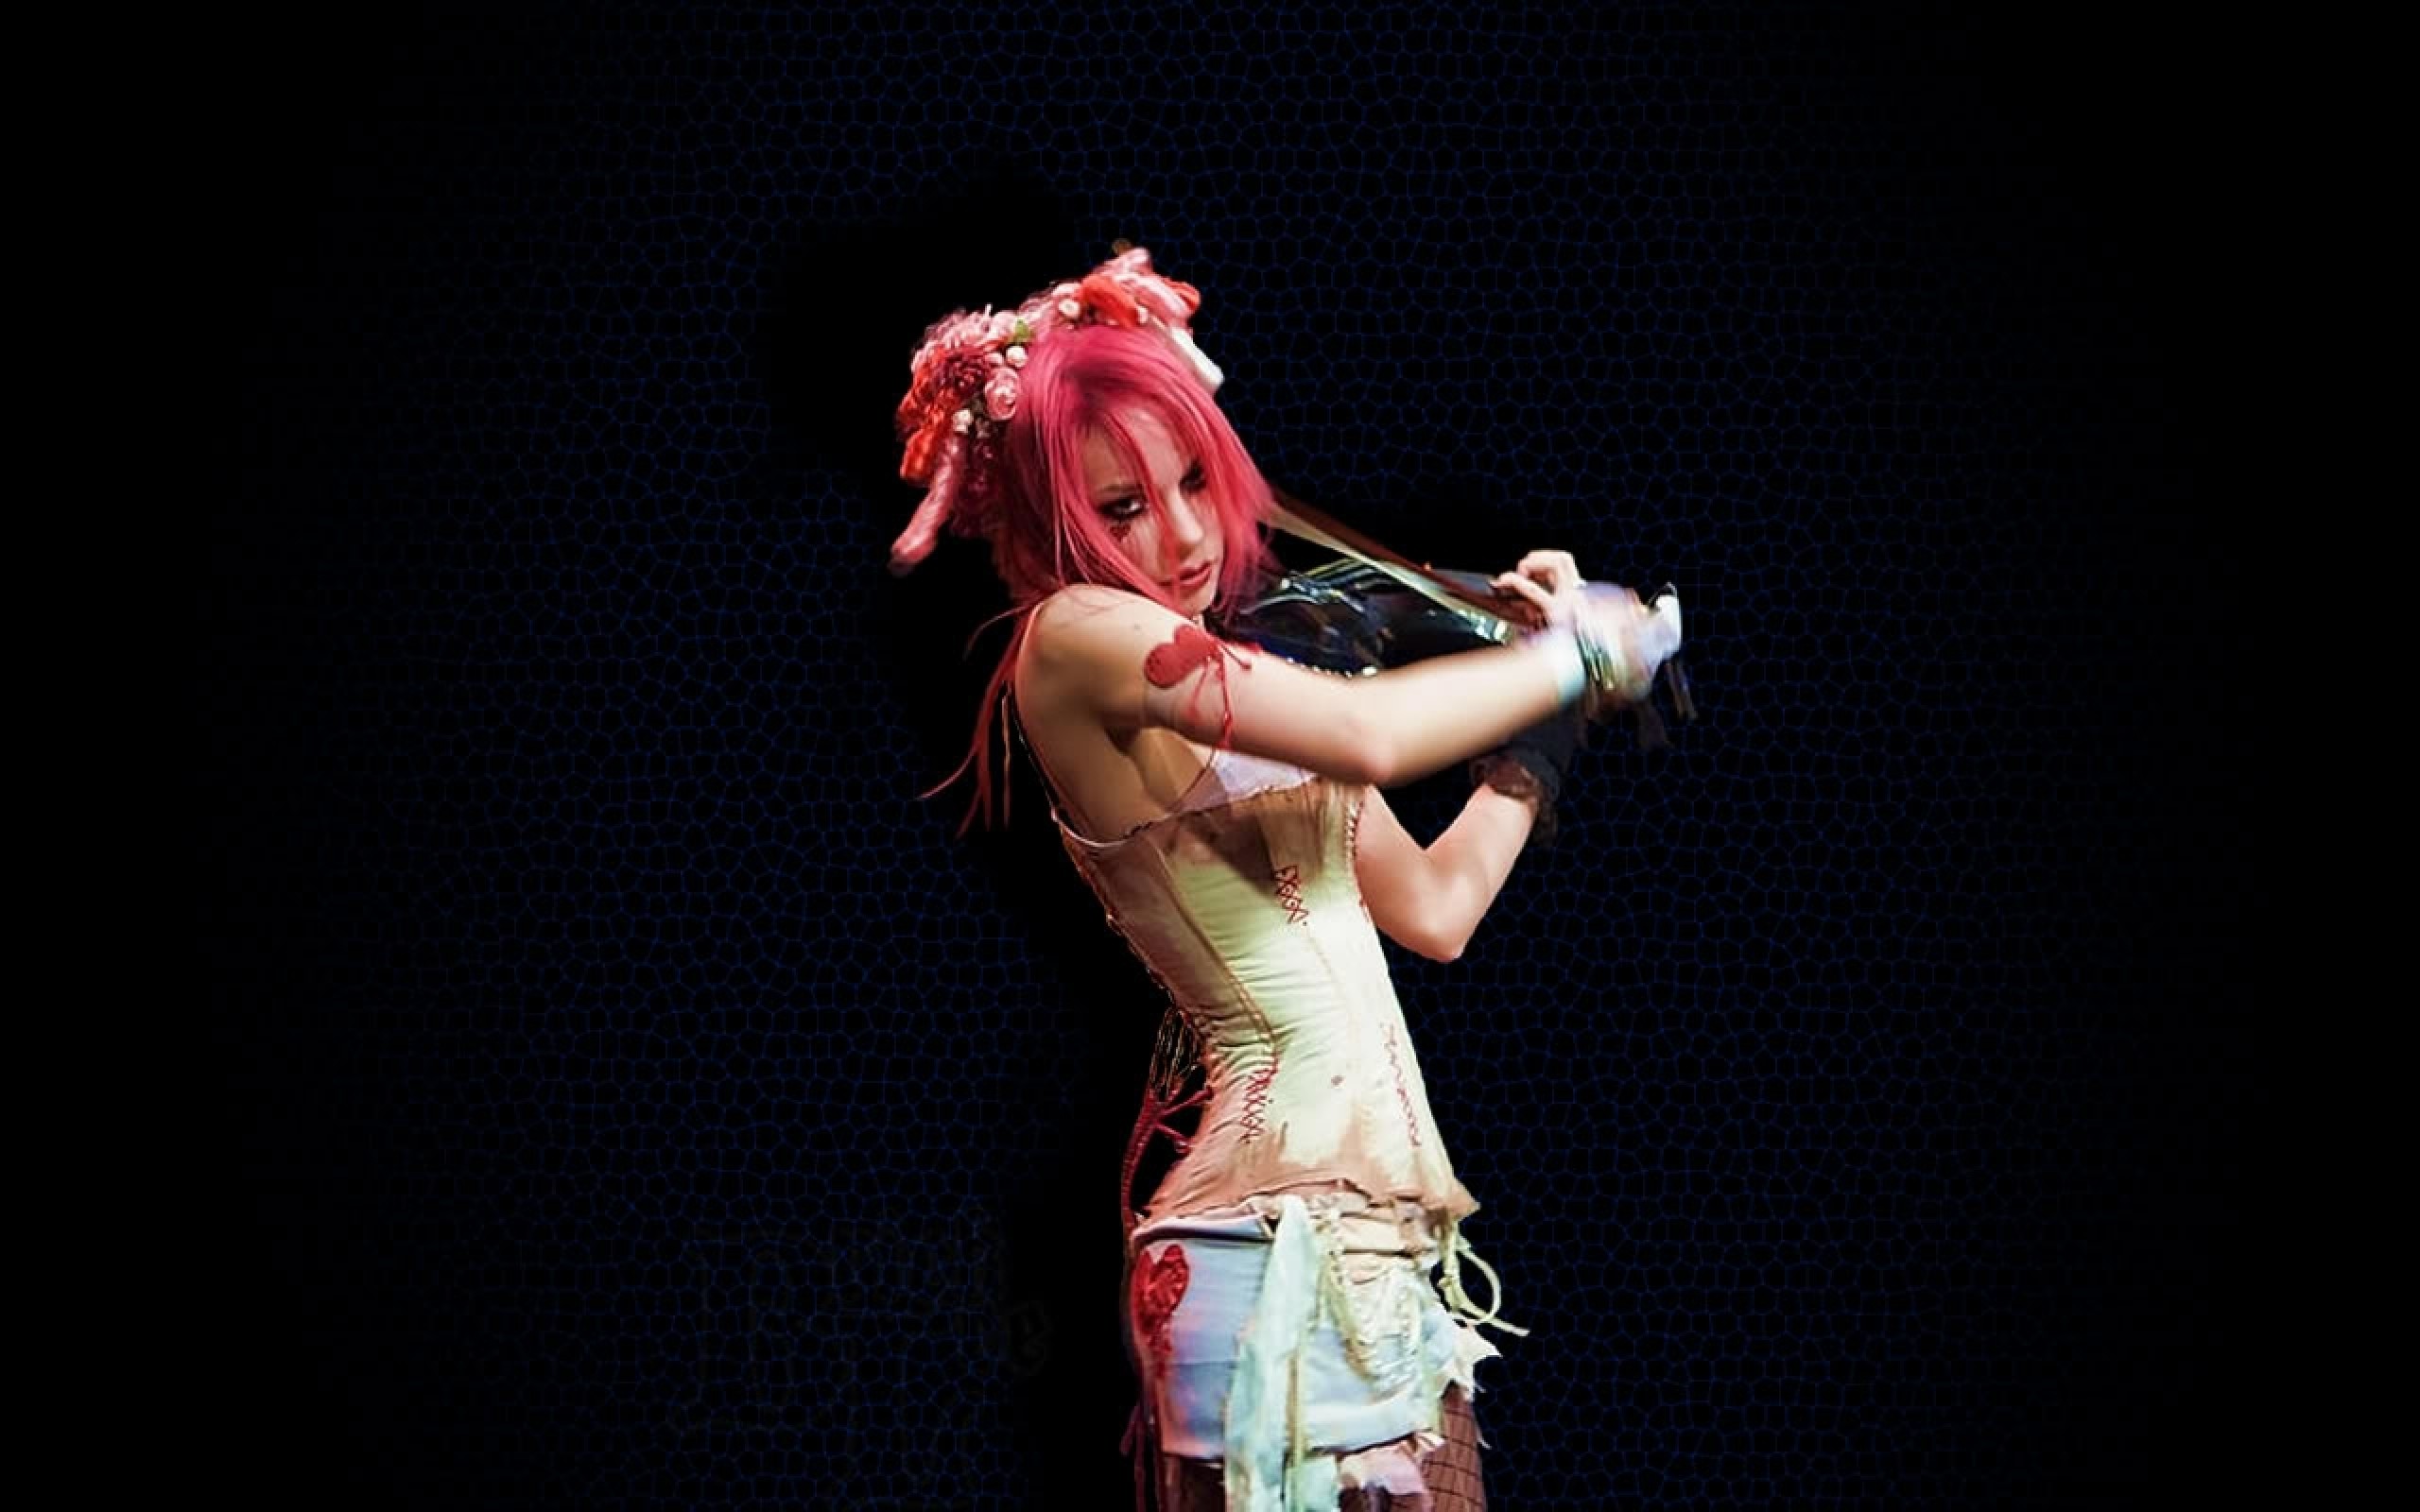 2560x1600 Emilie Autumn Liddell music singer songwriter poet violinist industrial  rock redhead glam r wallpaper |  | 164104 | WallpaperUP